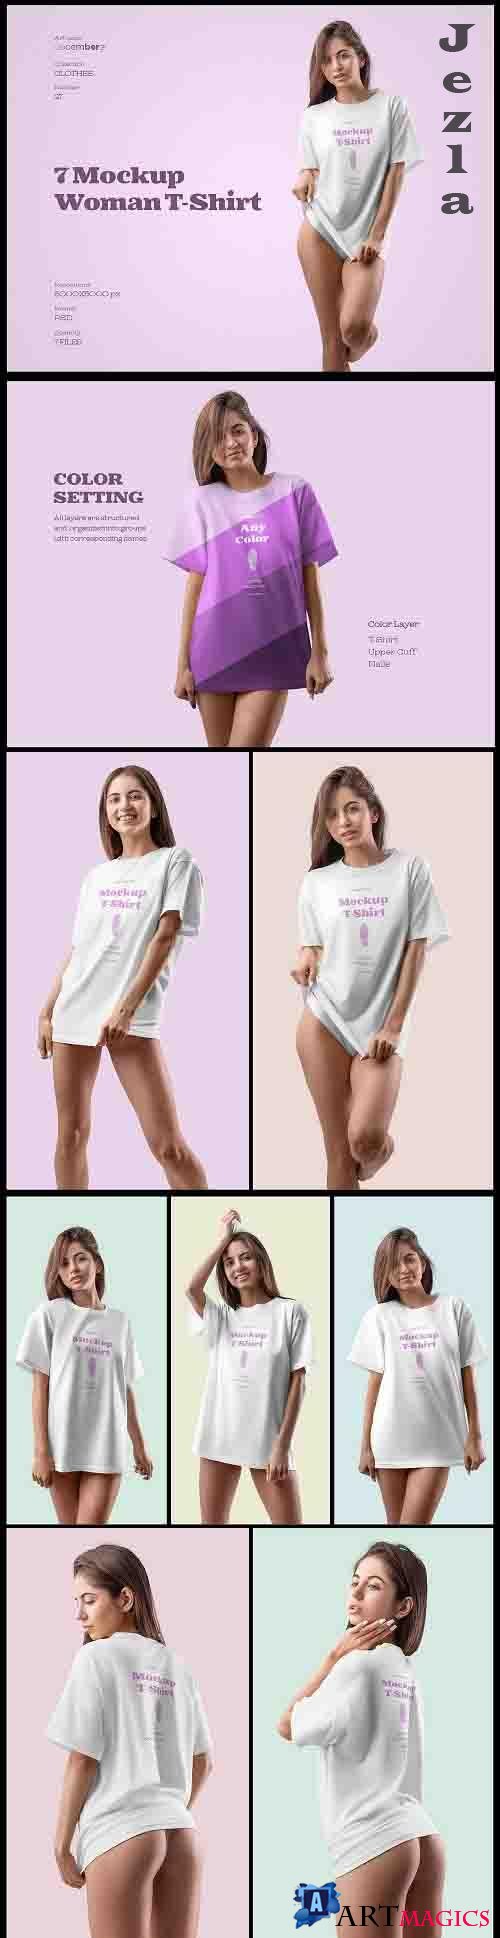 7 Mockups Woman T-Shirt Oversize